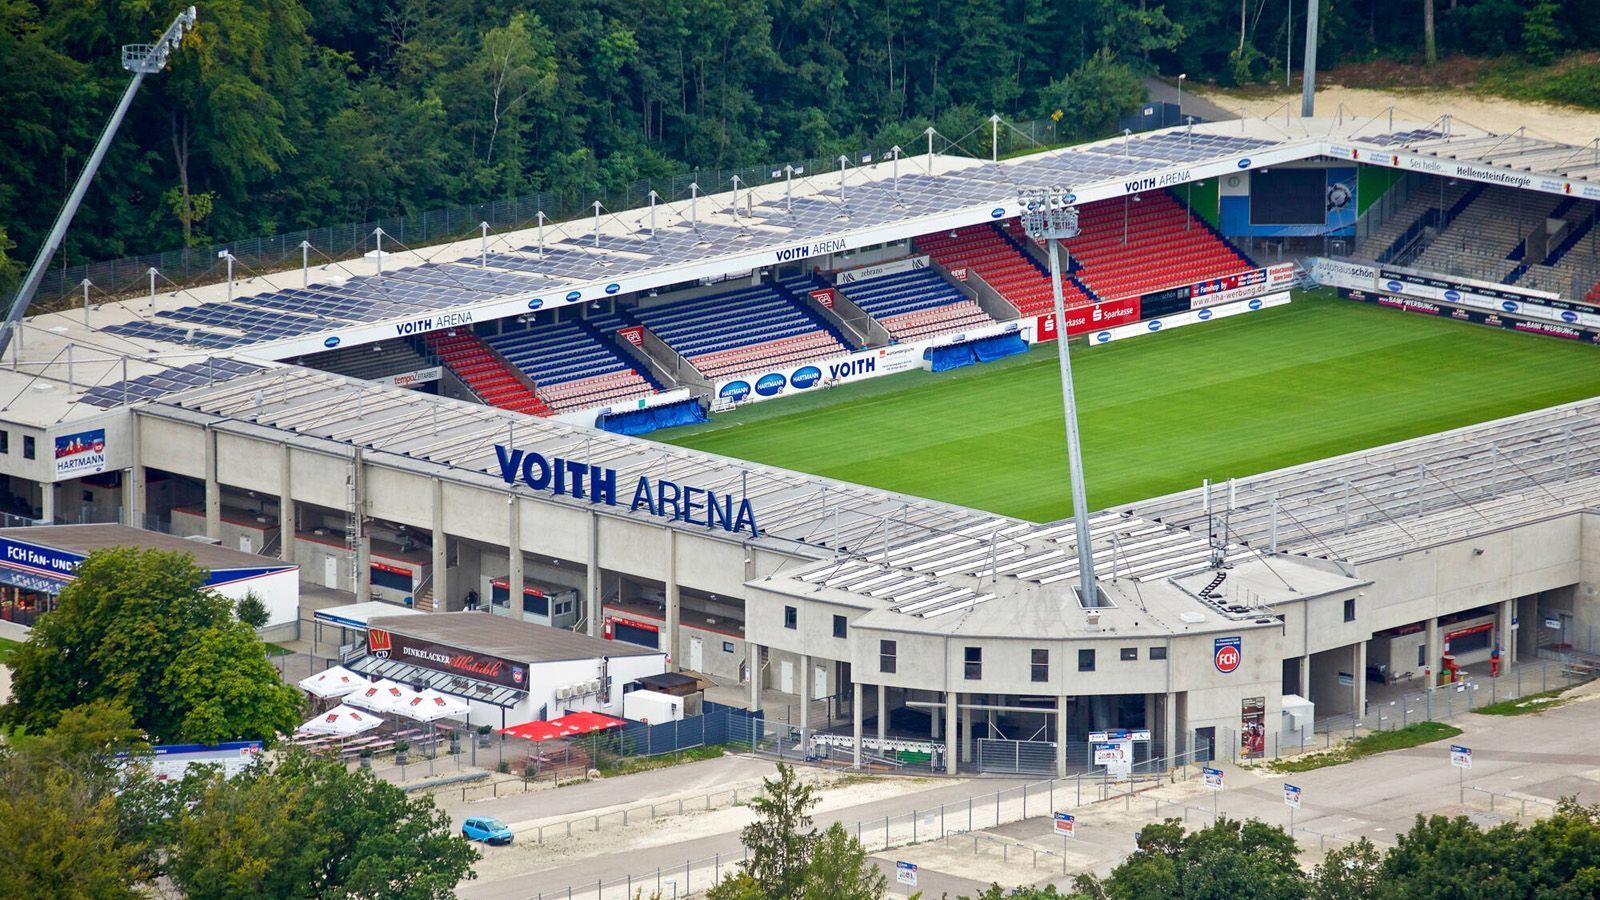 
                <strong>Voith-Arena (1. FC Heidenheim)</strong><br>
                &#x2022; Kapazität: 15.000<br>&#x2022; Sitzplätze: 4.300<br>&#x2022; Stehplätze: 10.700<br>&#x2022; Logen: 37<br>
              